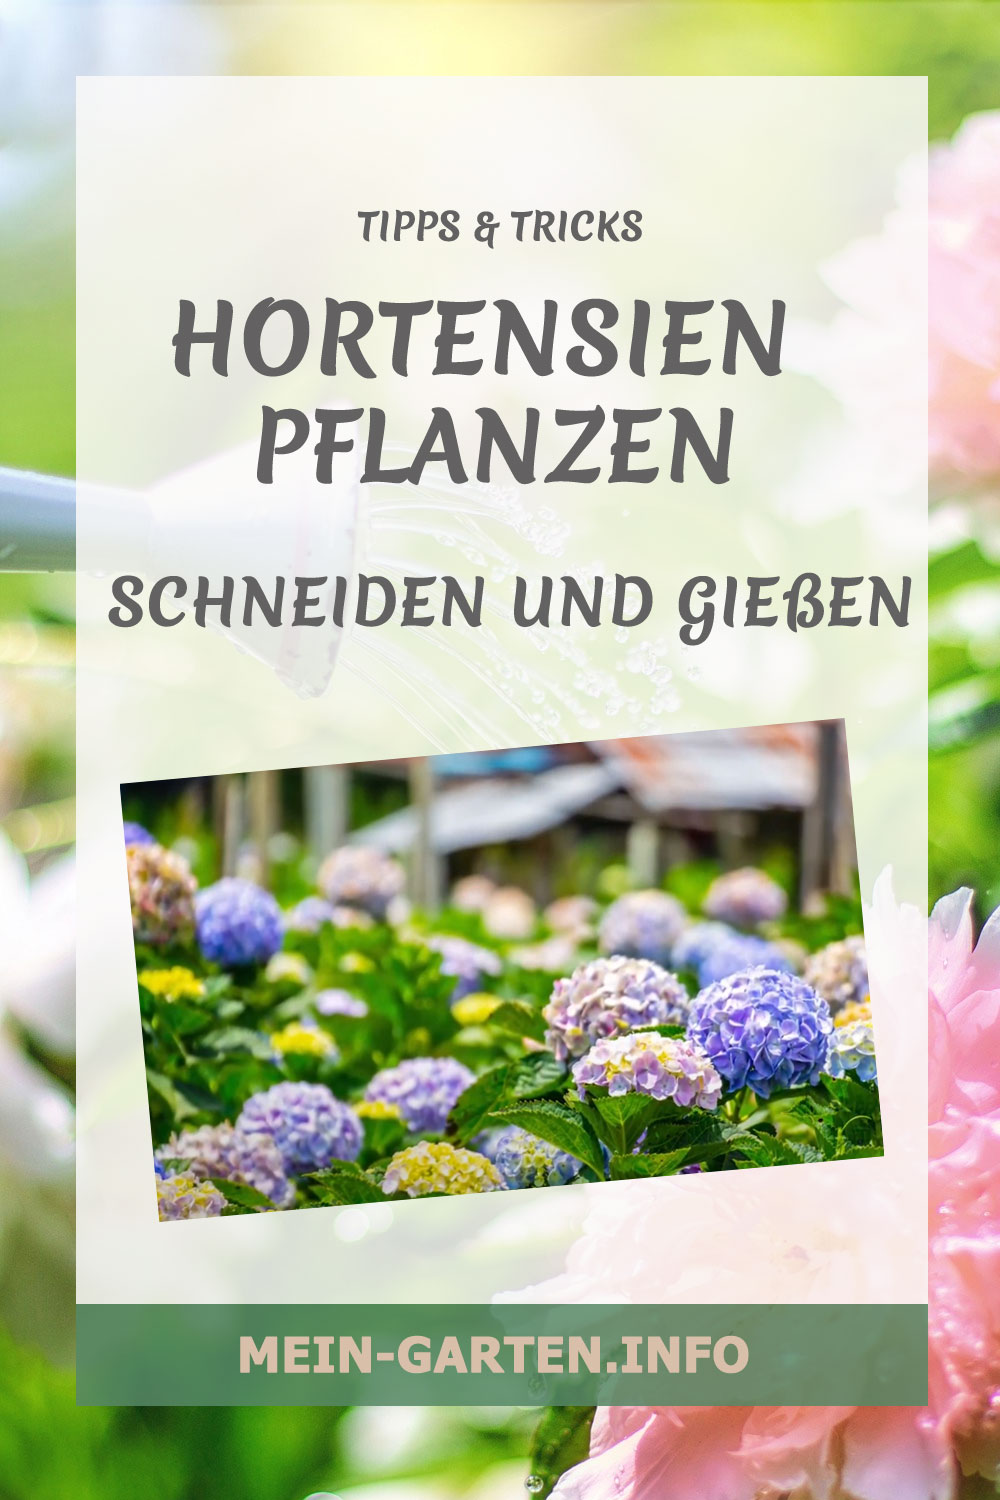 Hortensien - pflanzen